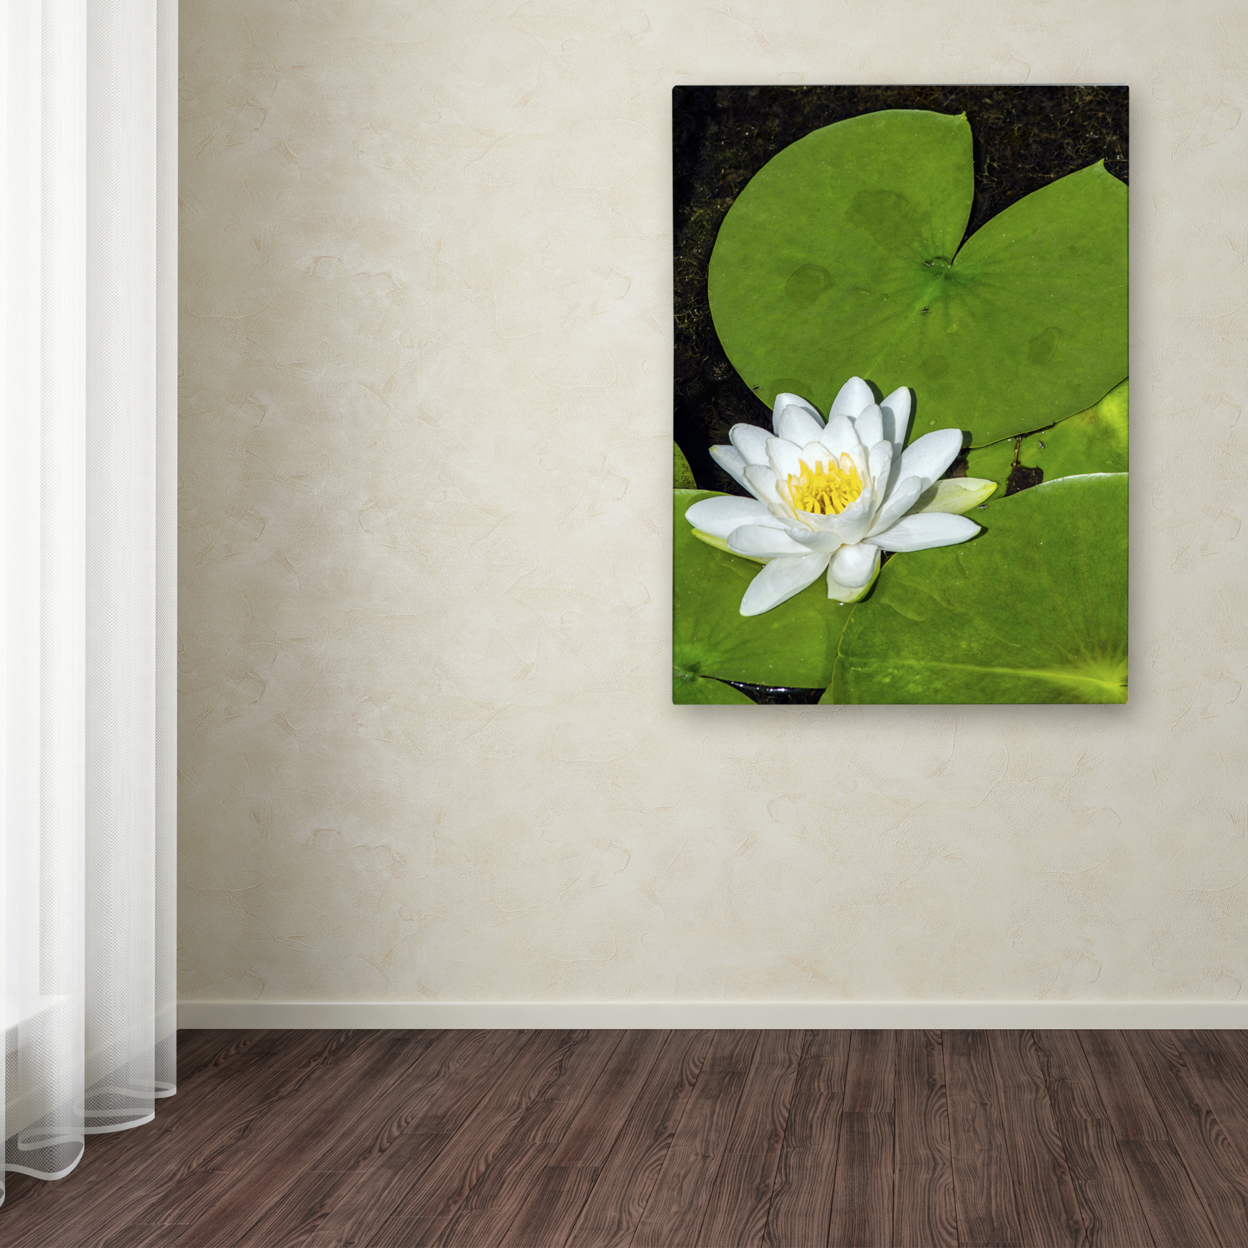 Kurt Shaffer 'White Lotus' 14 X 19 Canvas Art